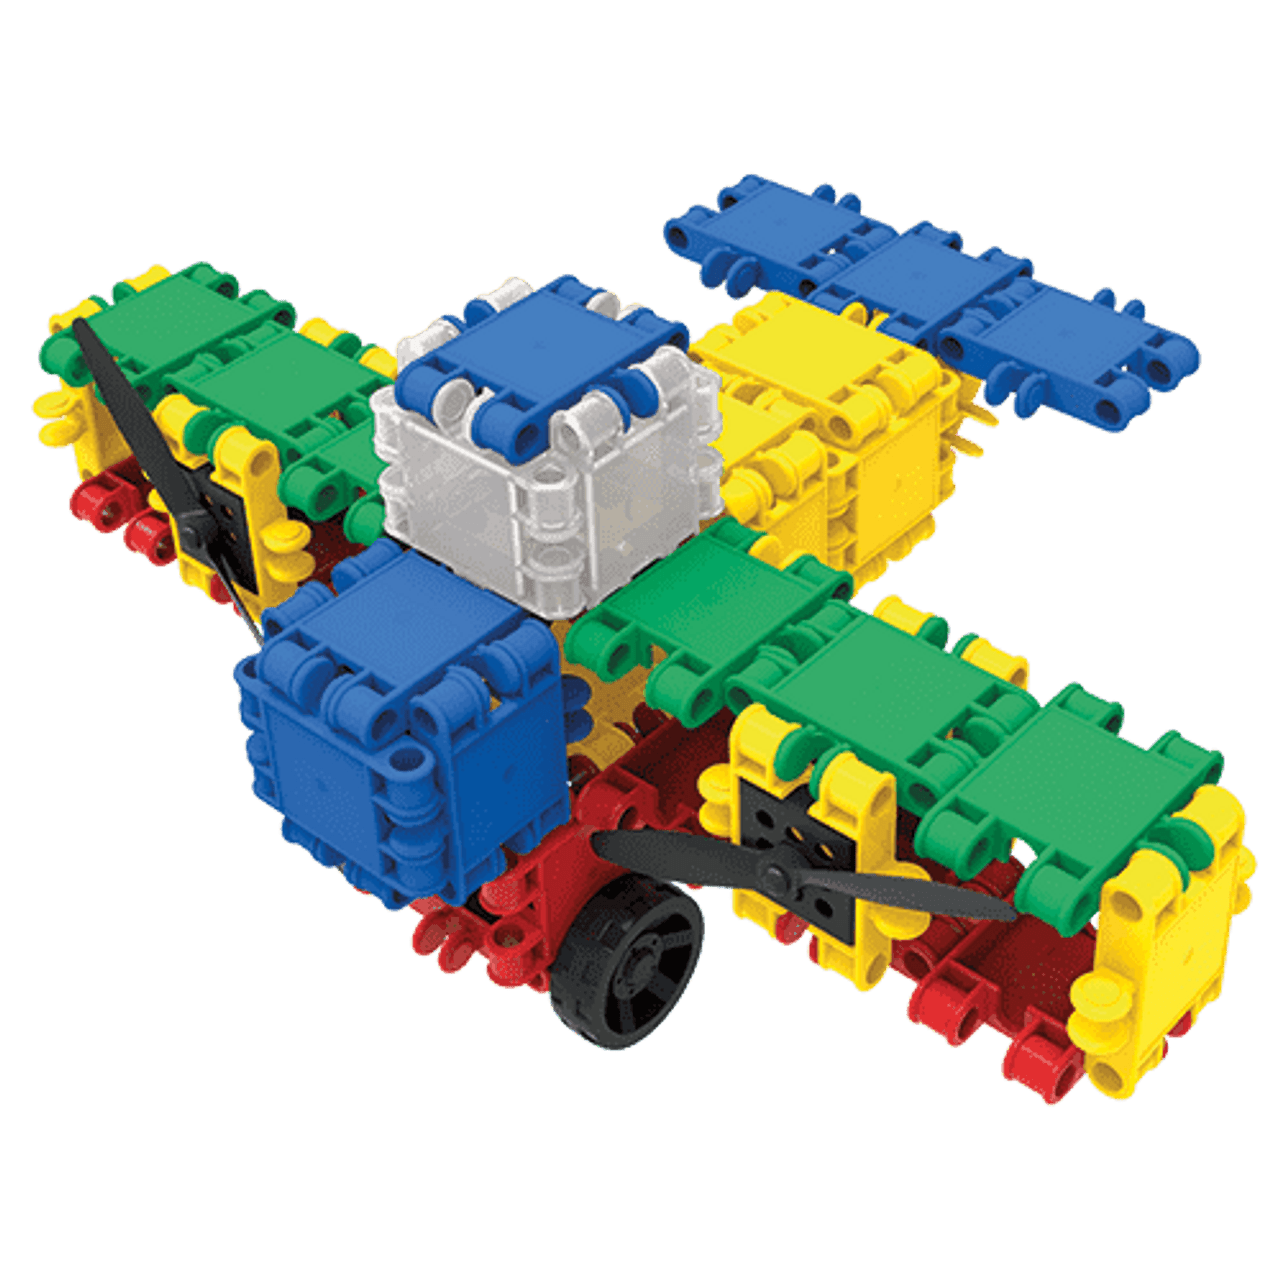 Clics Build & Play Rollerbox Construction Set, 560 Pieces